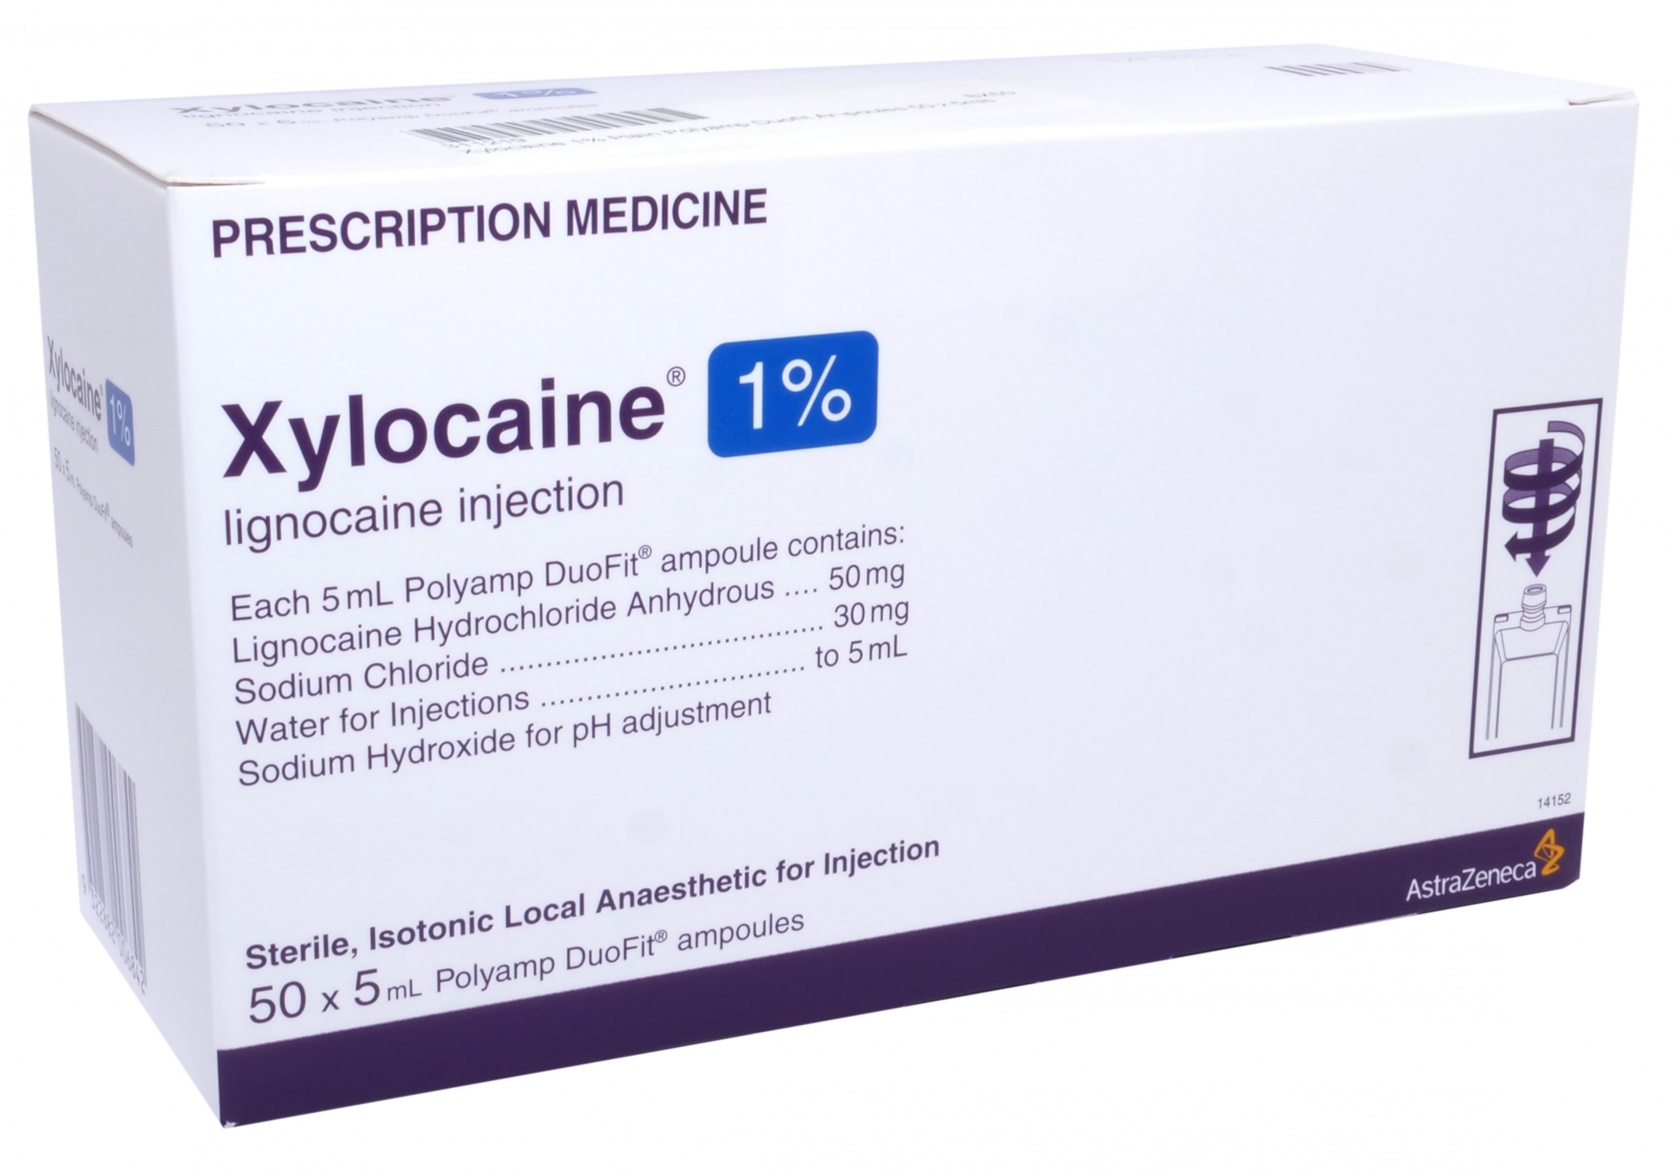 Xylocaine 1% Plain Polyamp Duofit Ampoules 50 x 5mls image 0